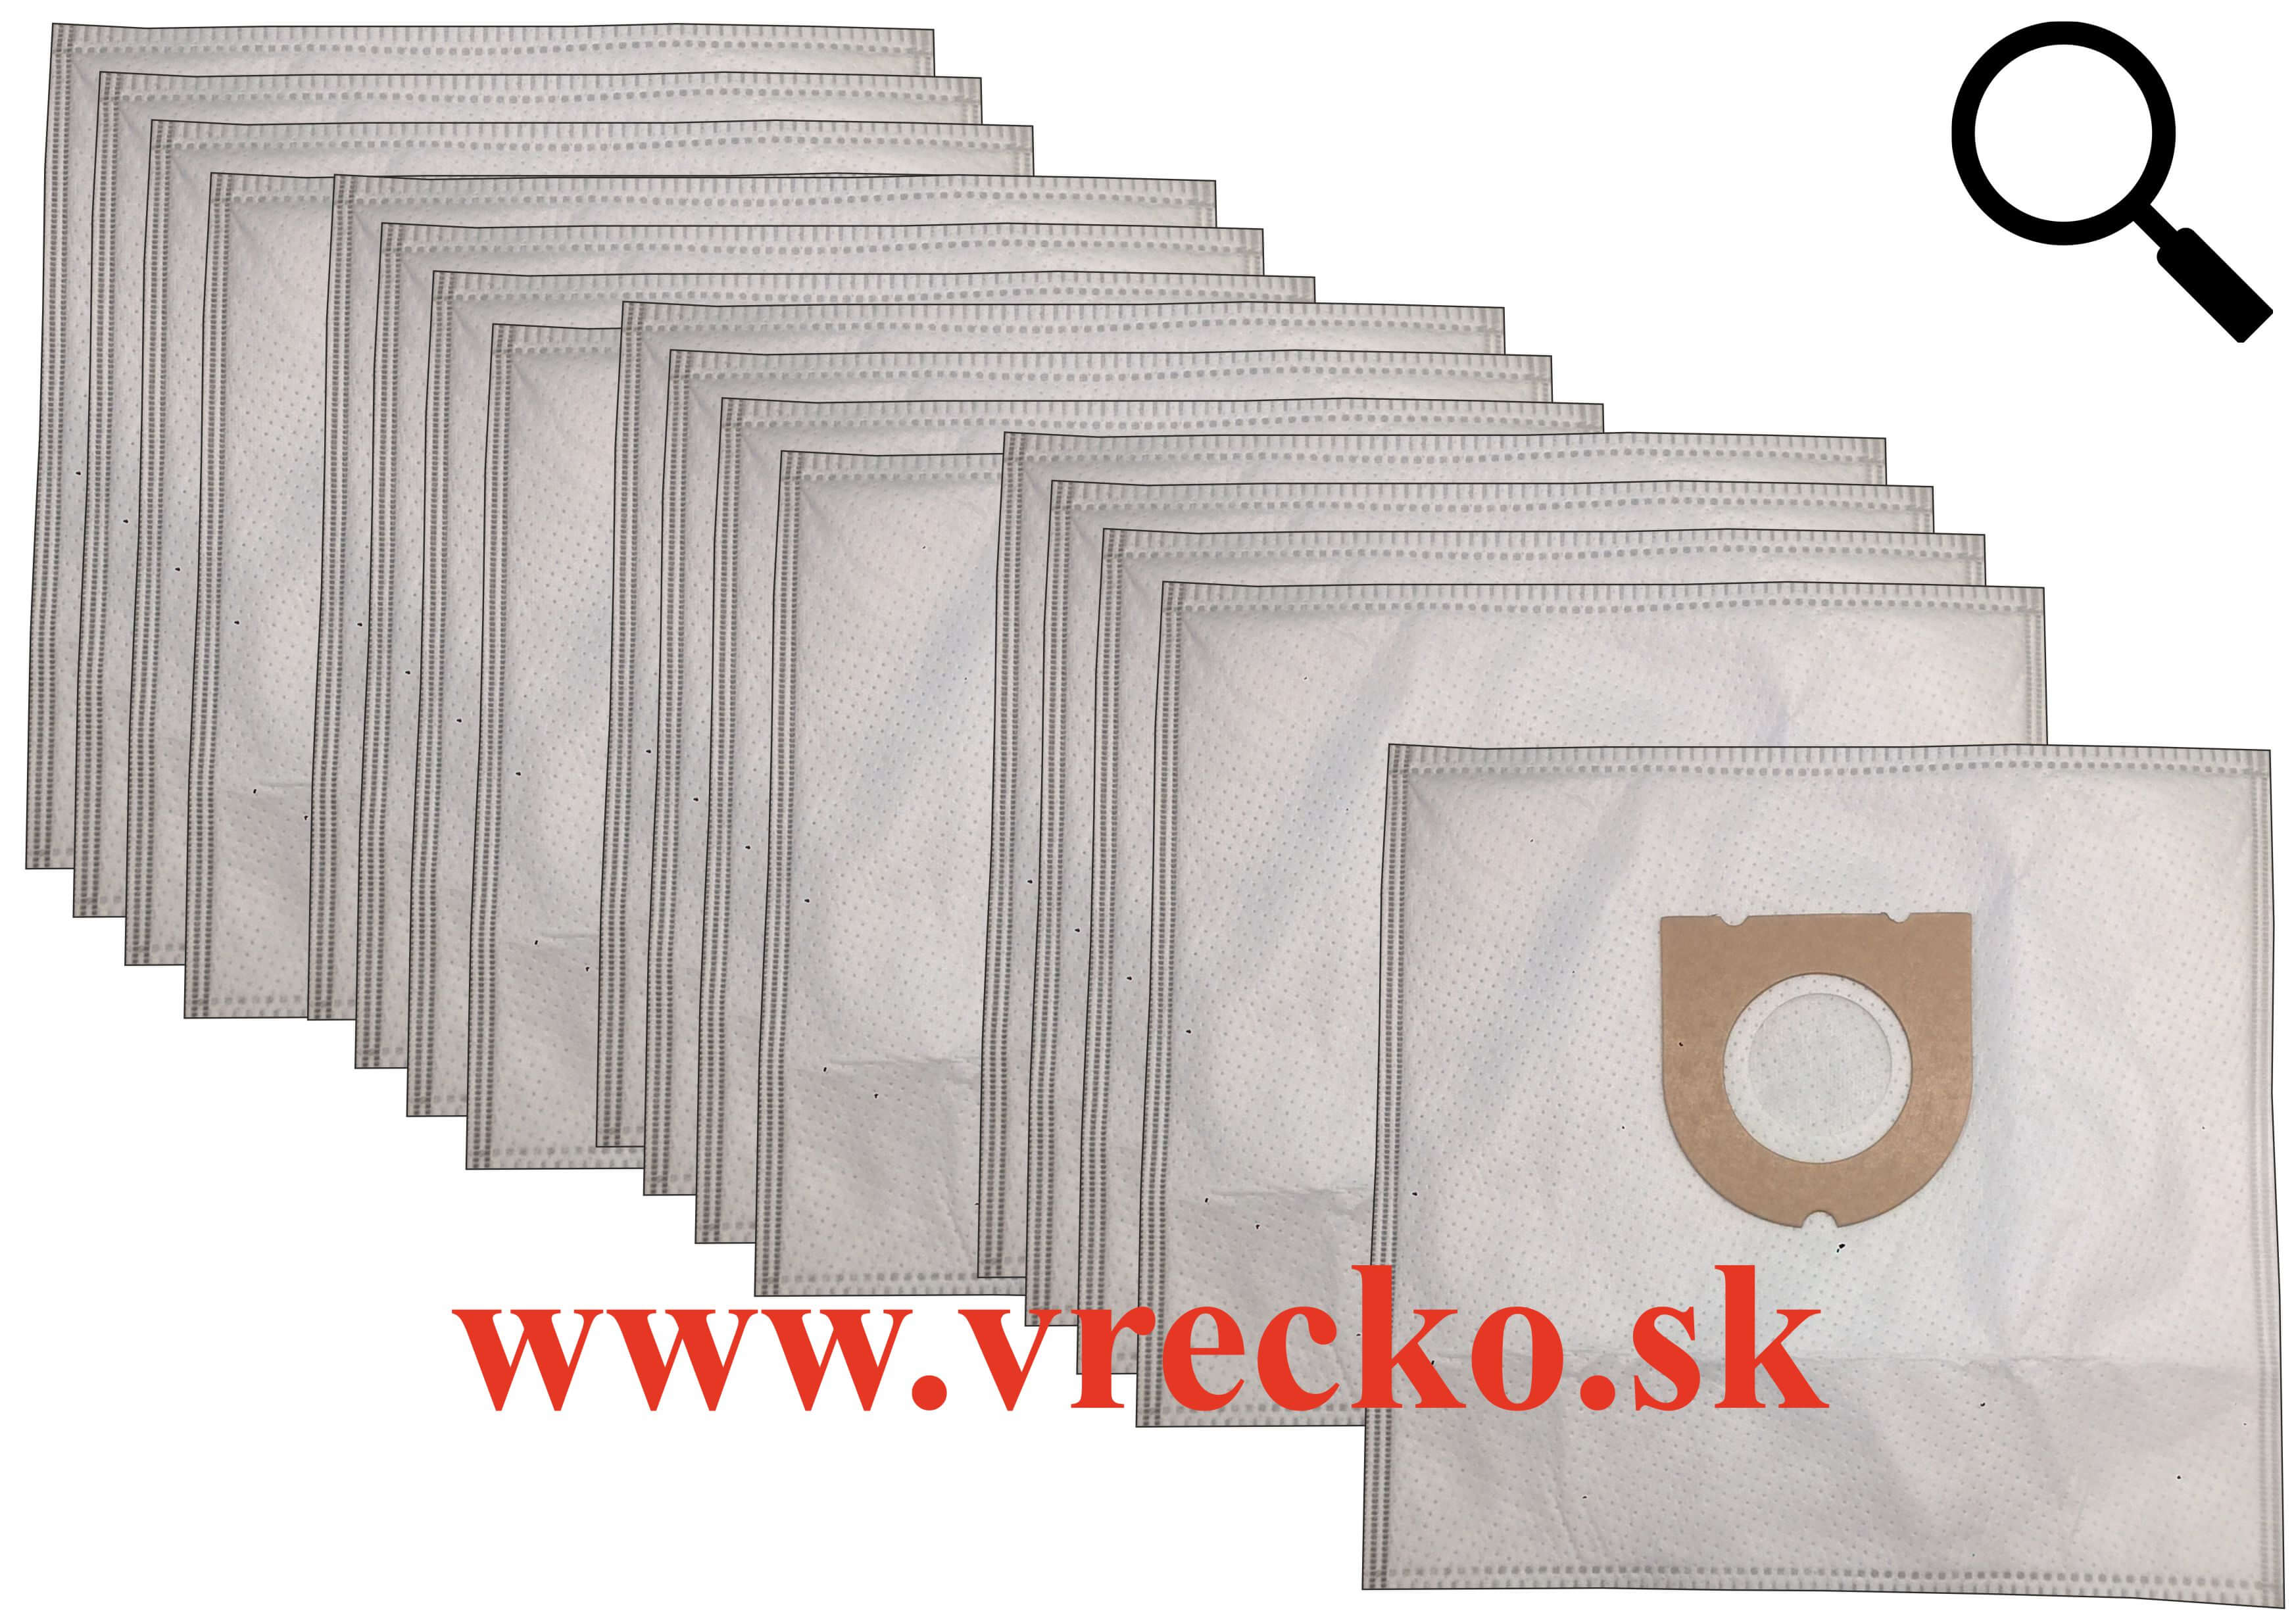 Eta 0406-0408 - Textilné vrecká do vysávača XXL vo zvýhodnenom balení s dopravou zdarma (17ks)